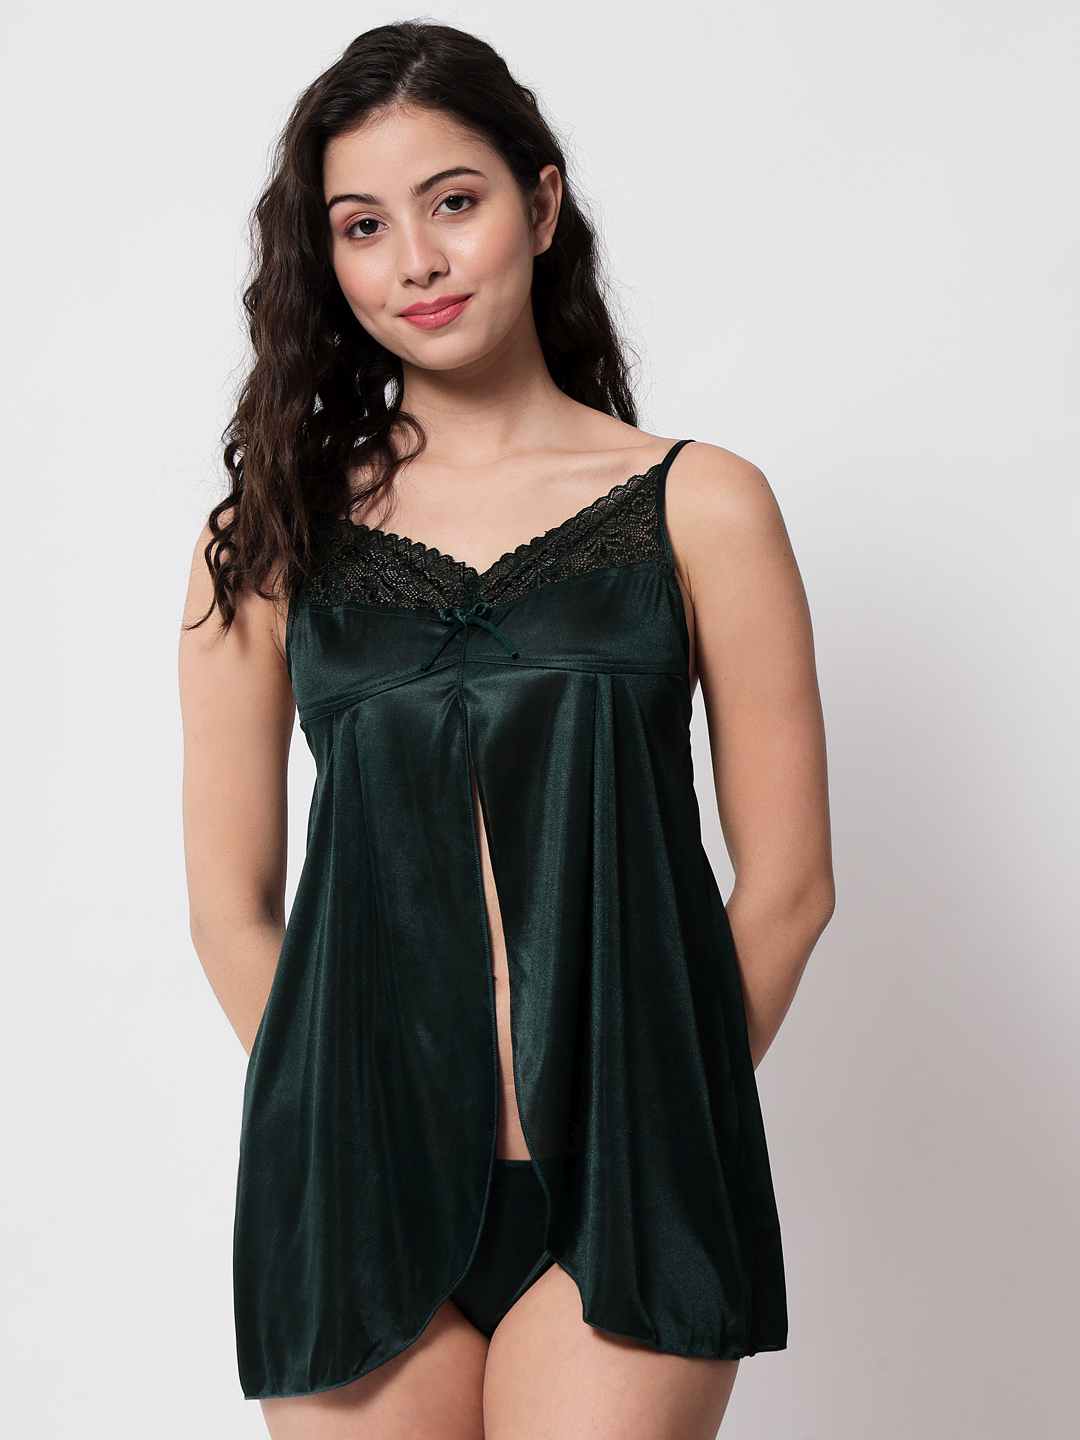 Plus Size Satin Green Honeymoon Babydoll Hot Night Dress 41Gb – Klamotten